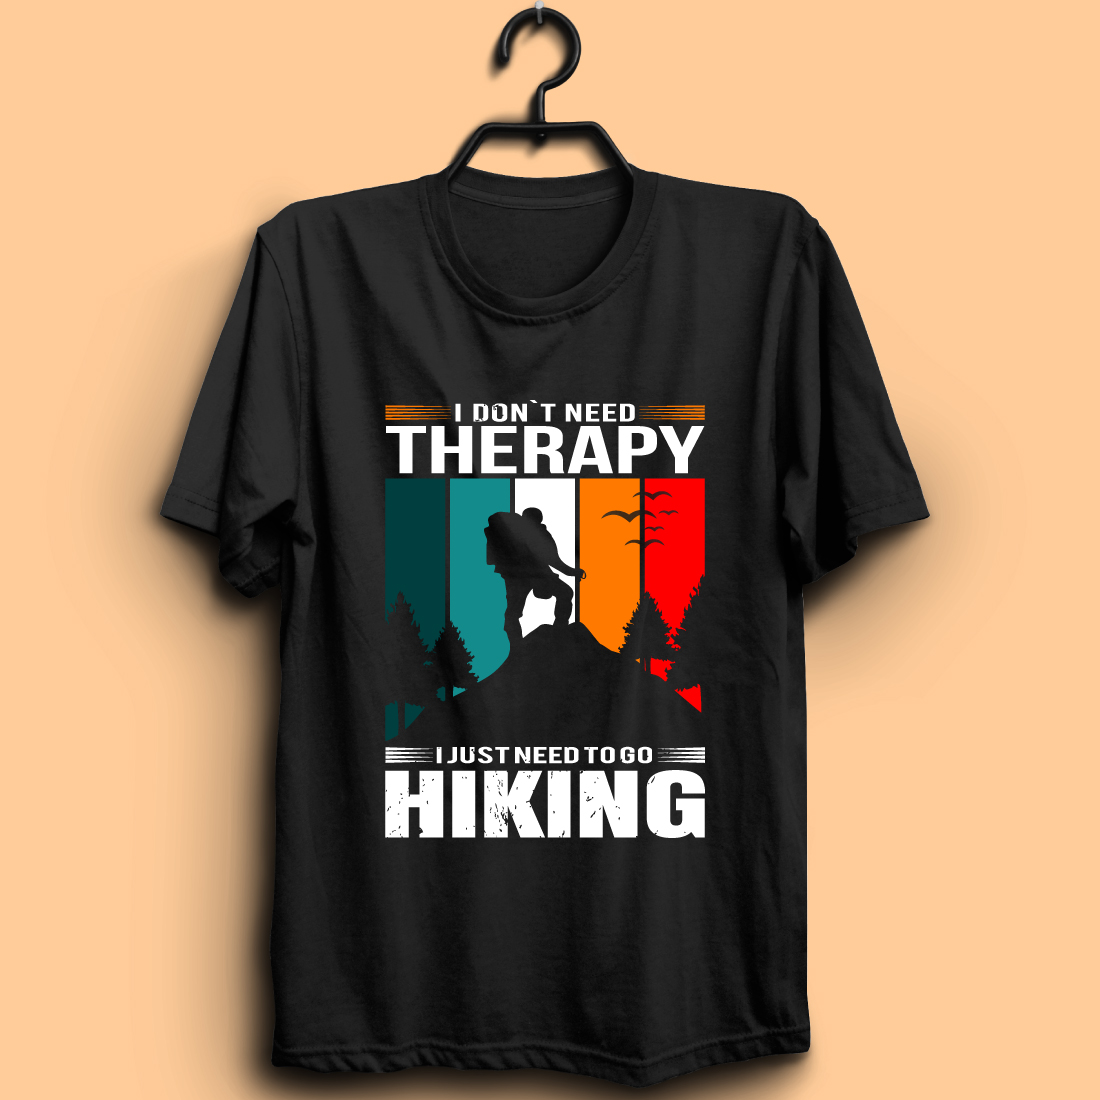 hiking t shirt design05 502